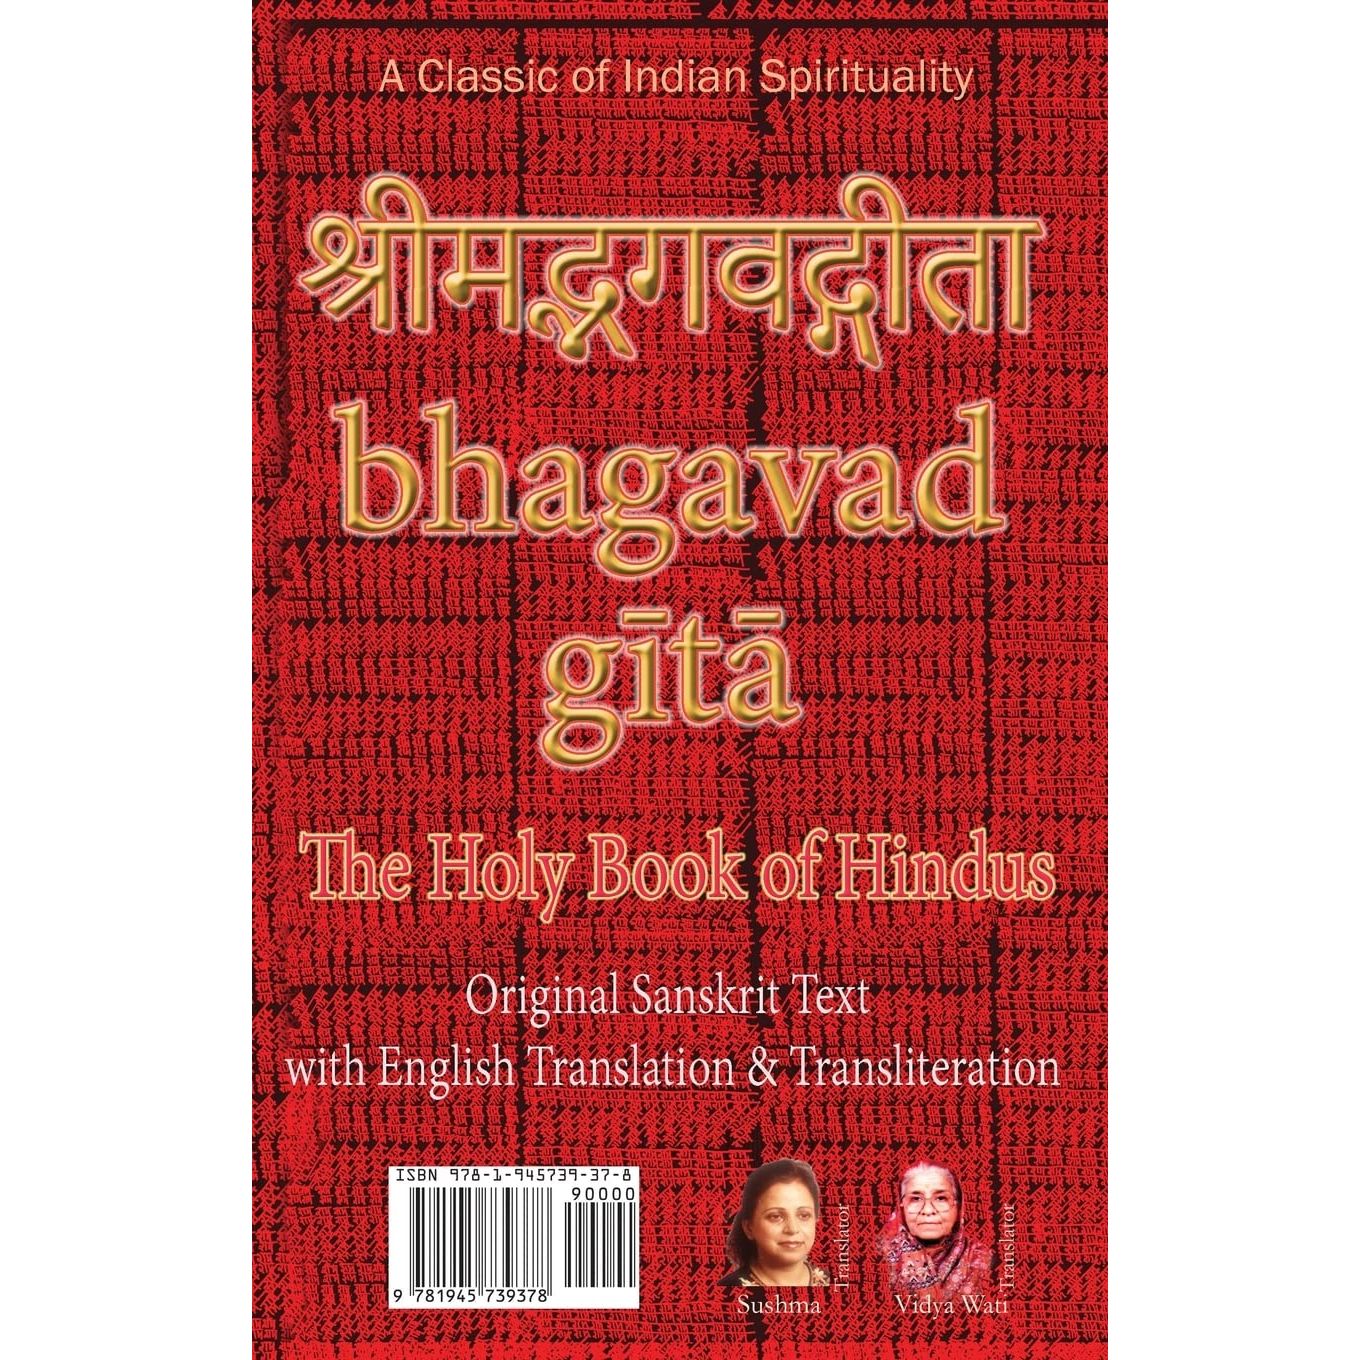 Bhagavad Gita, The Holy Book of Hindus: Original Sanskrit Text with English Translation